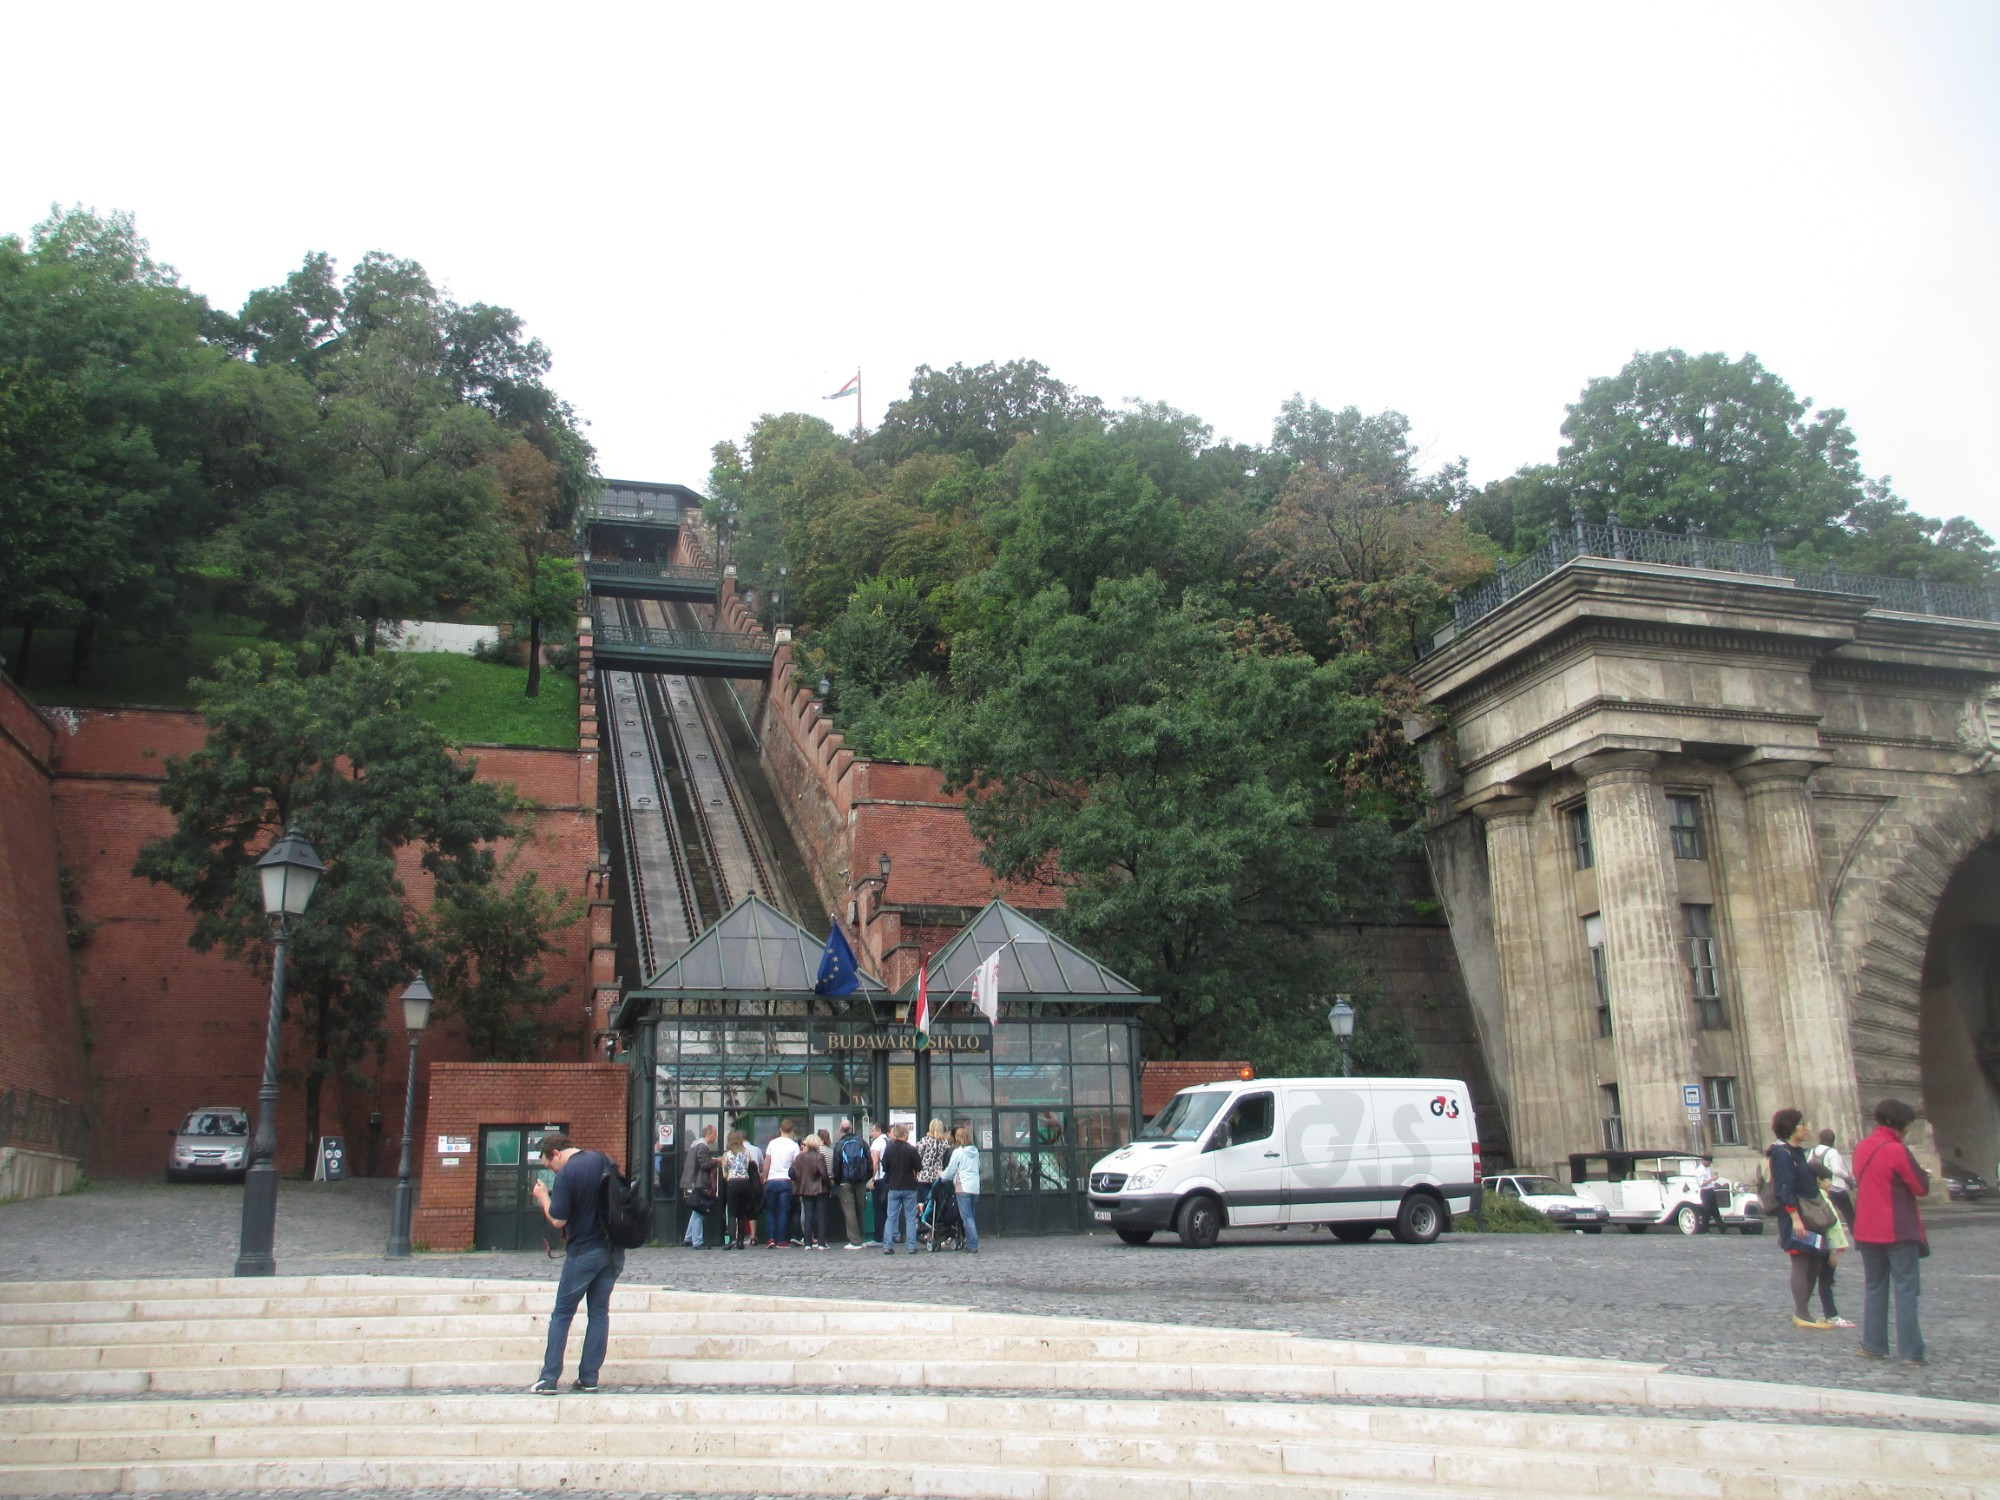 Будапешт. Фуникулёр на холм замка Буды. (15.09.2014)